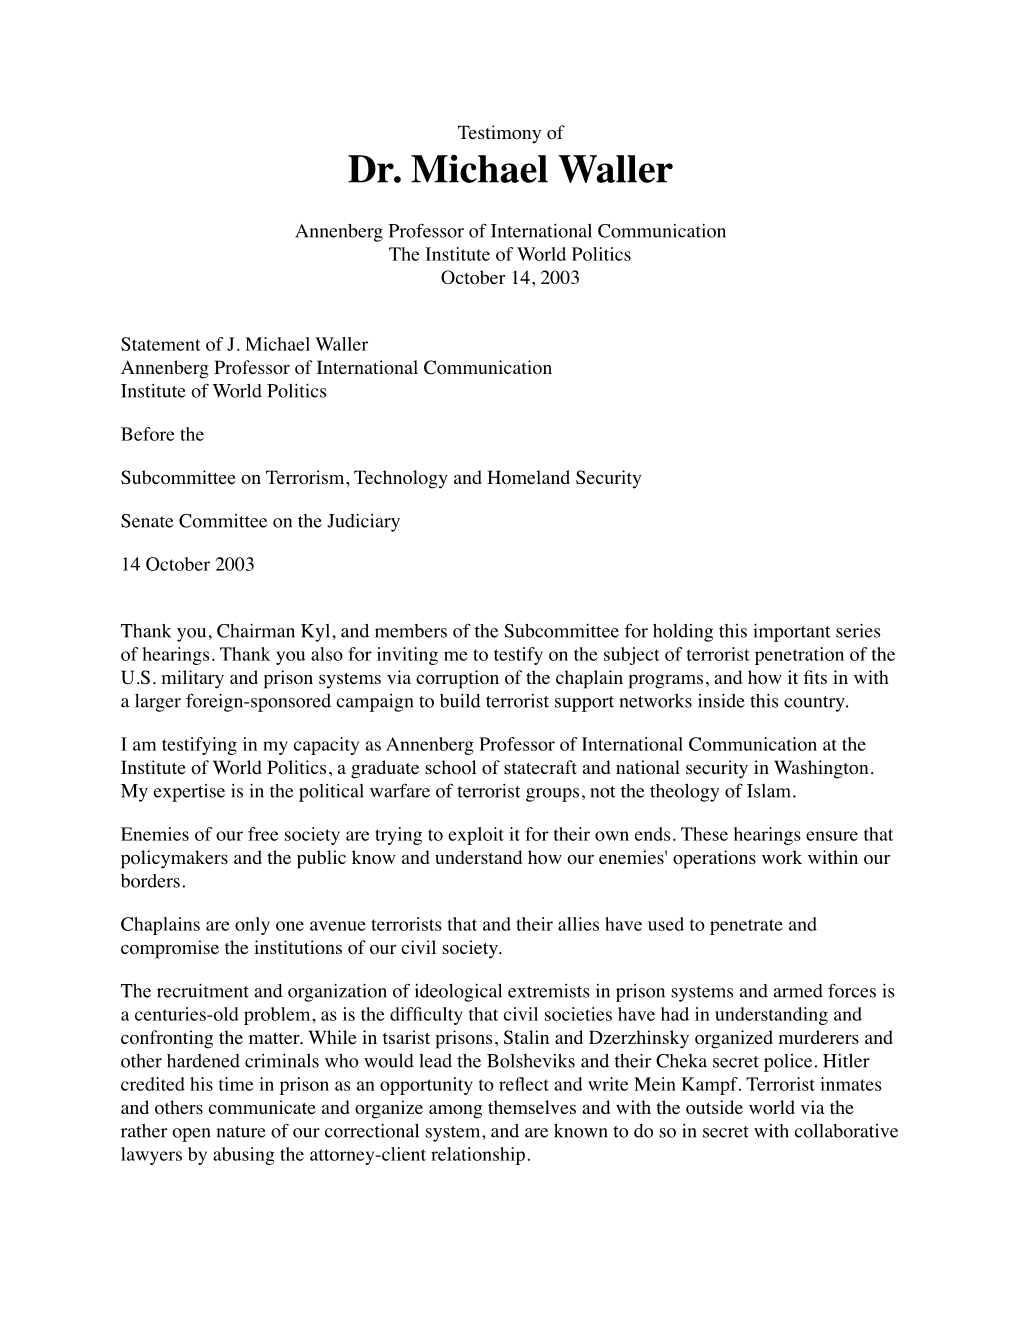 Dr. Michael Waller